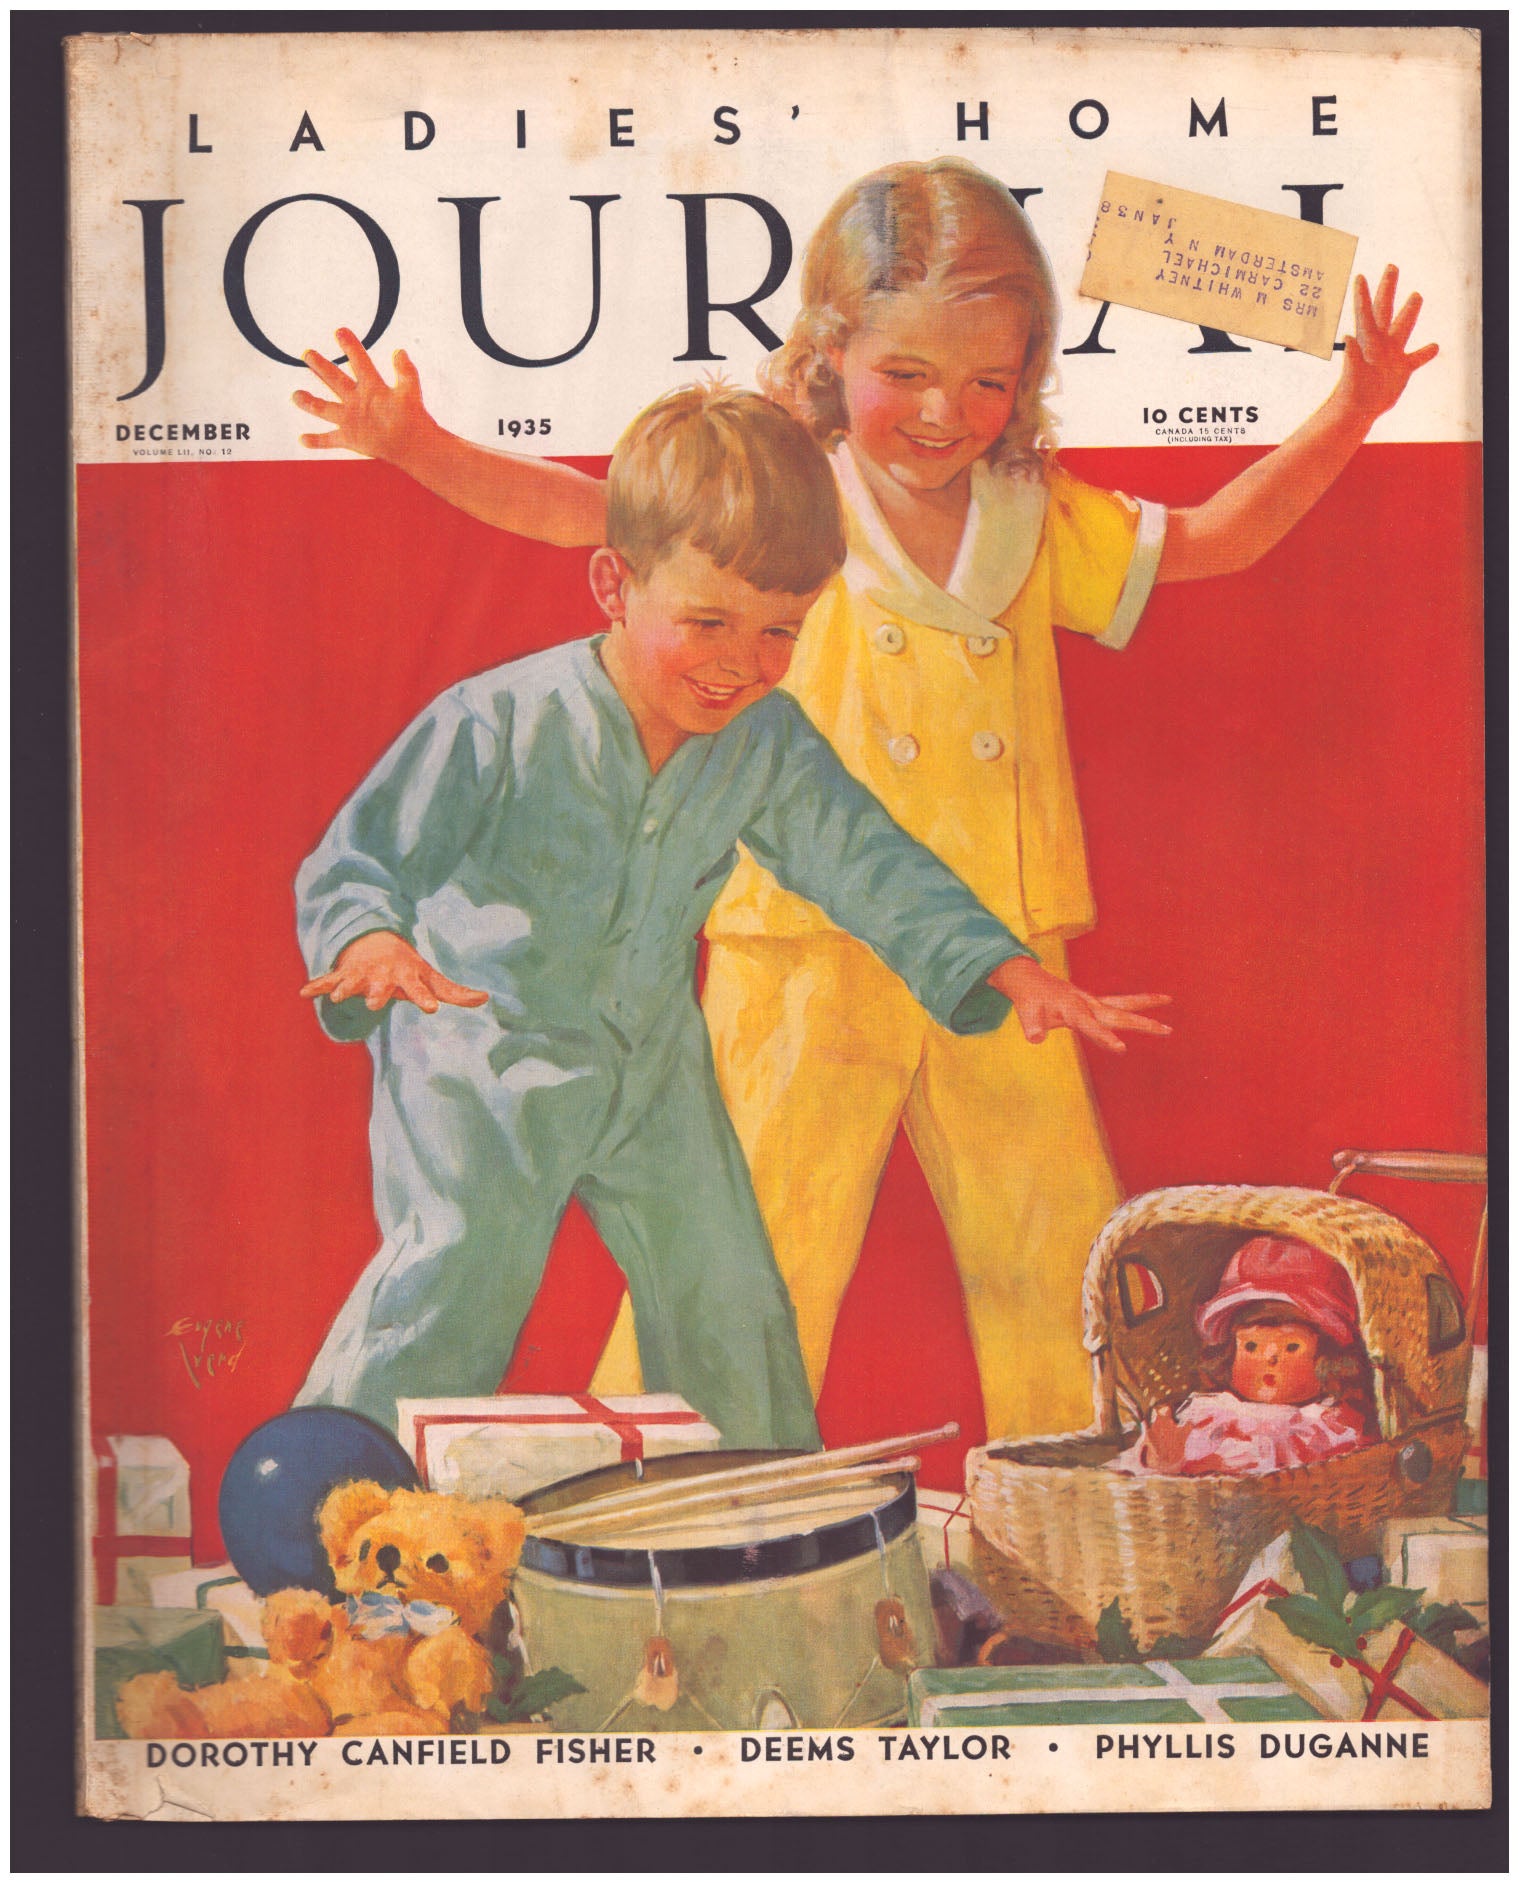 Gould, Bruce; Gould, Beatrice Blackmark, eds - Ladies' Home Journal December 1935